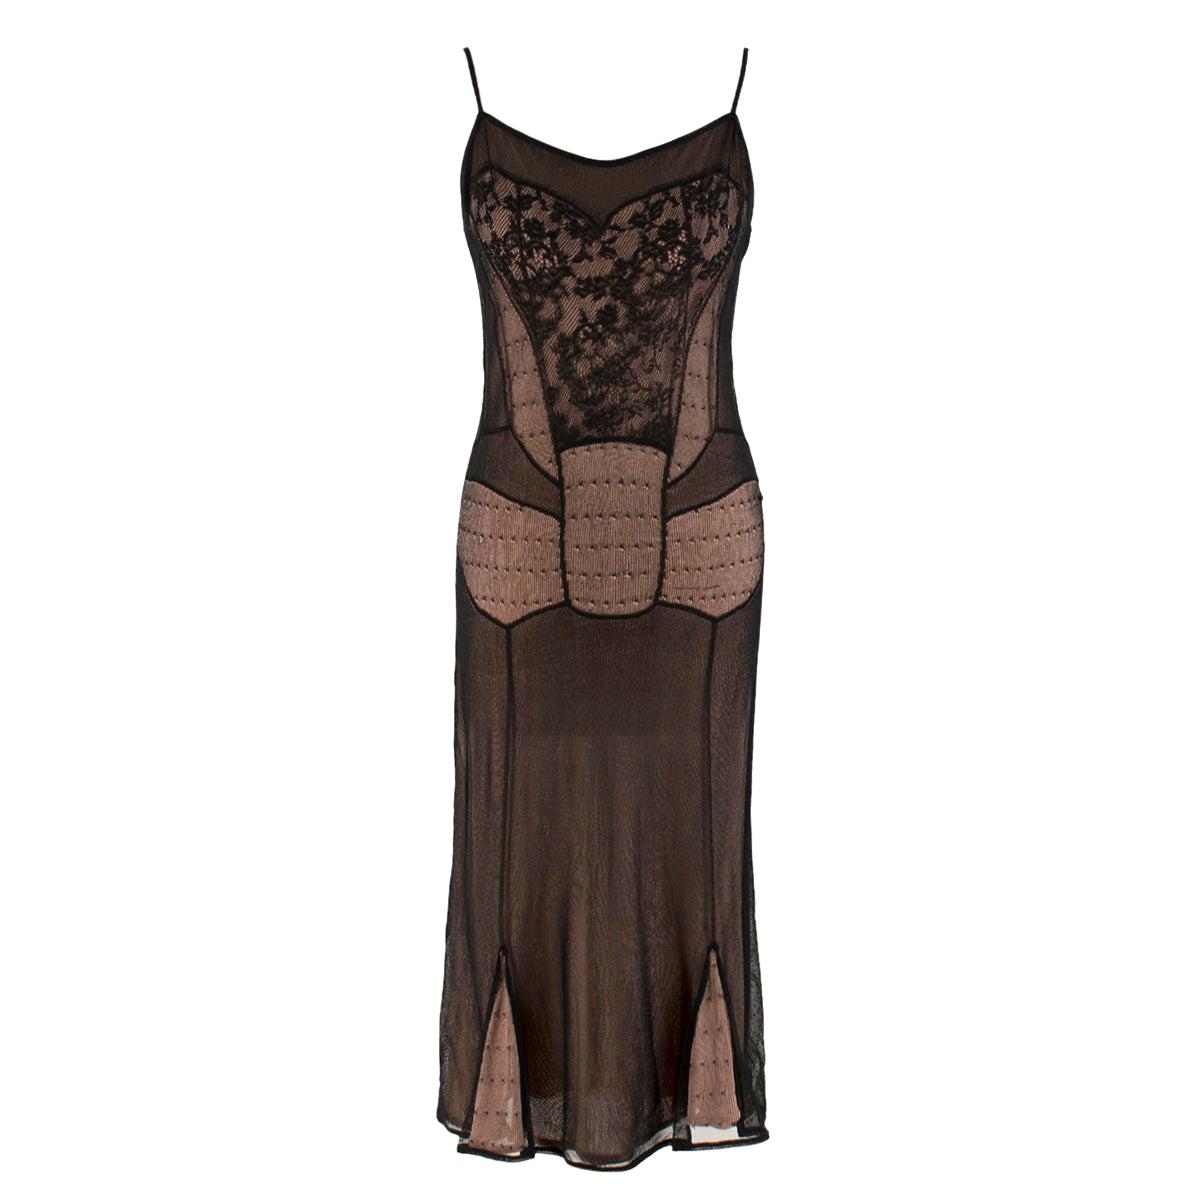 Christian Dior Boutique Black & Nude Lace Dress - Size L For Sale